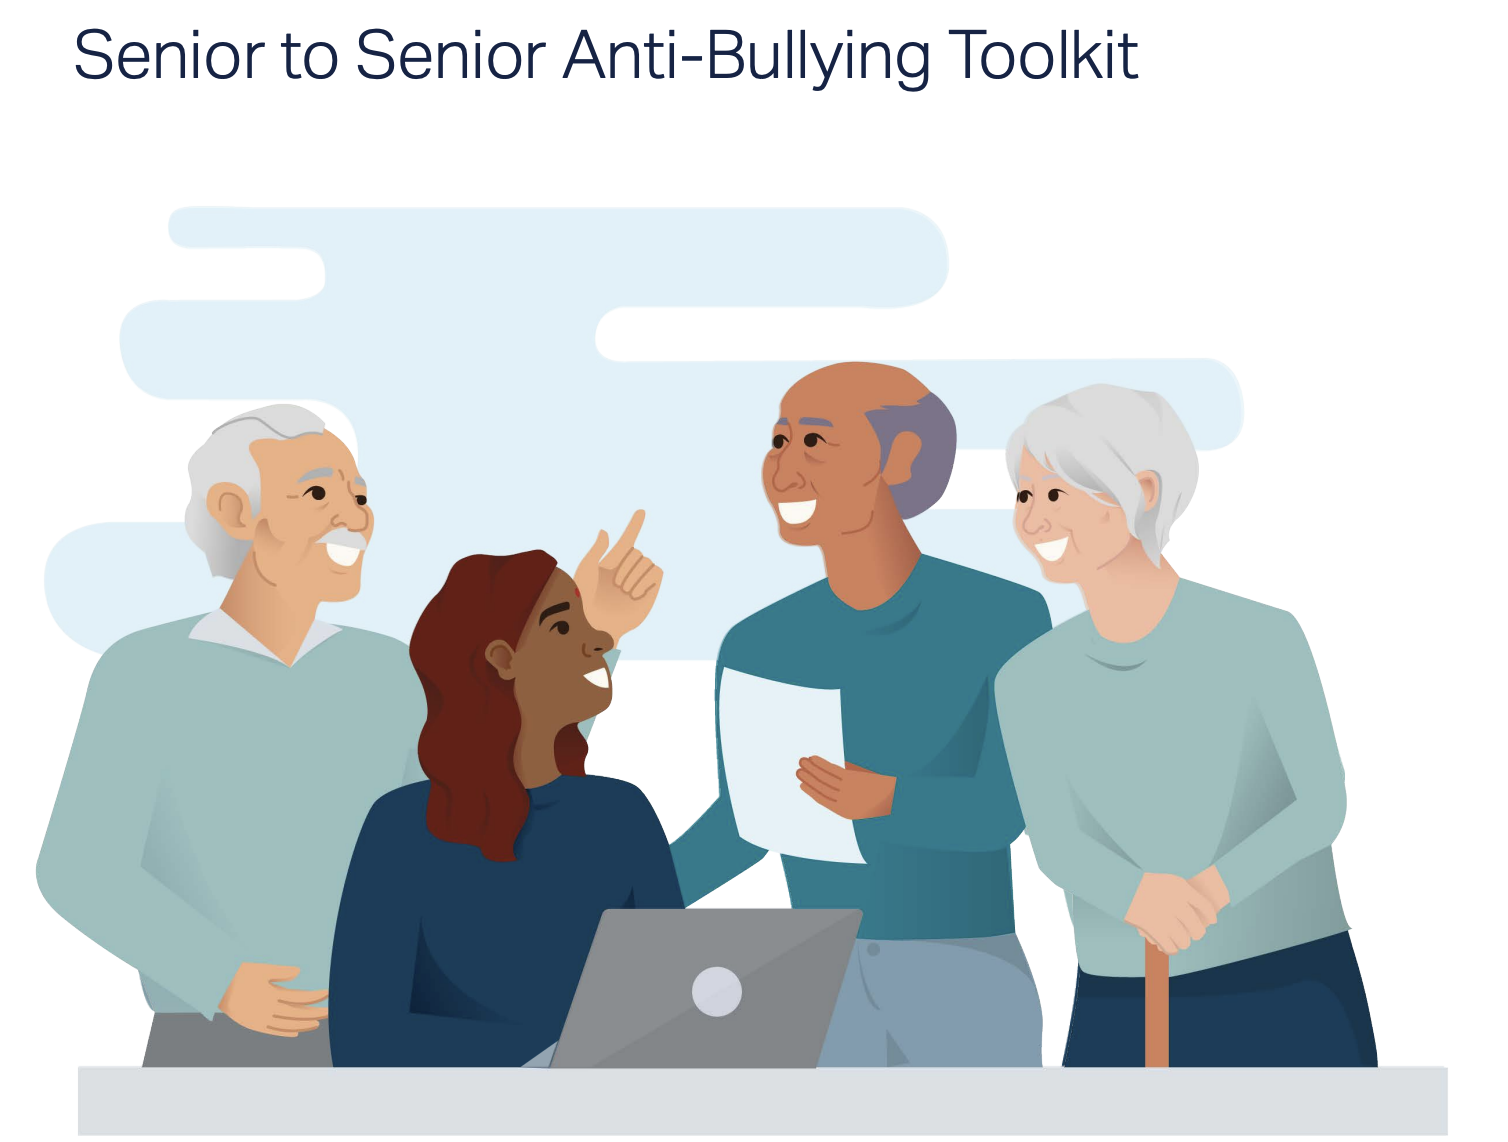 Senior to Senior Anti-Bullying Toolkit